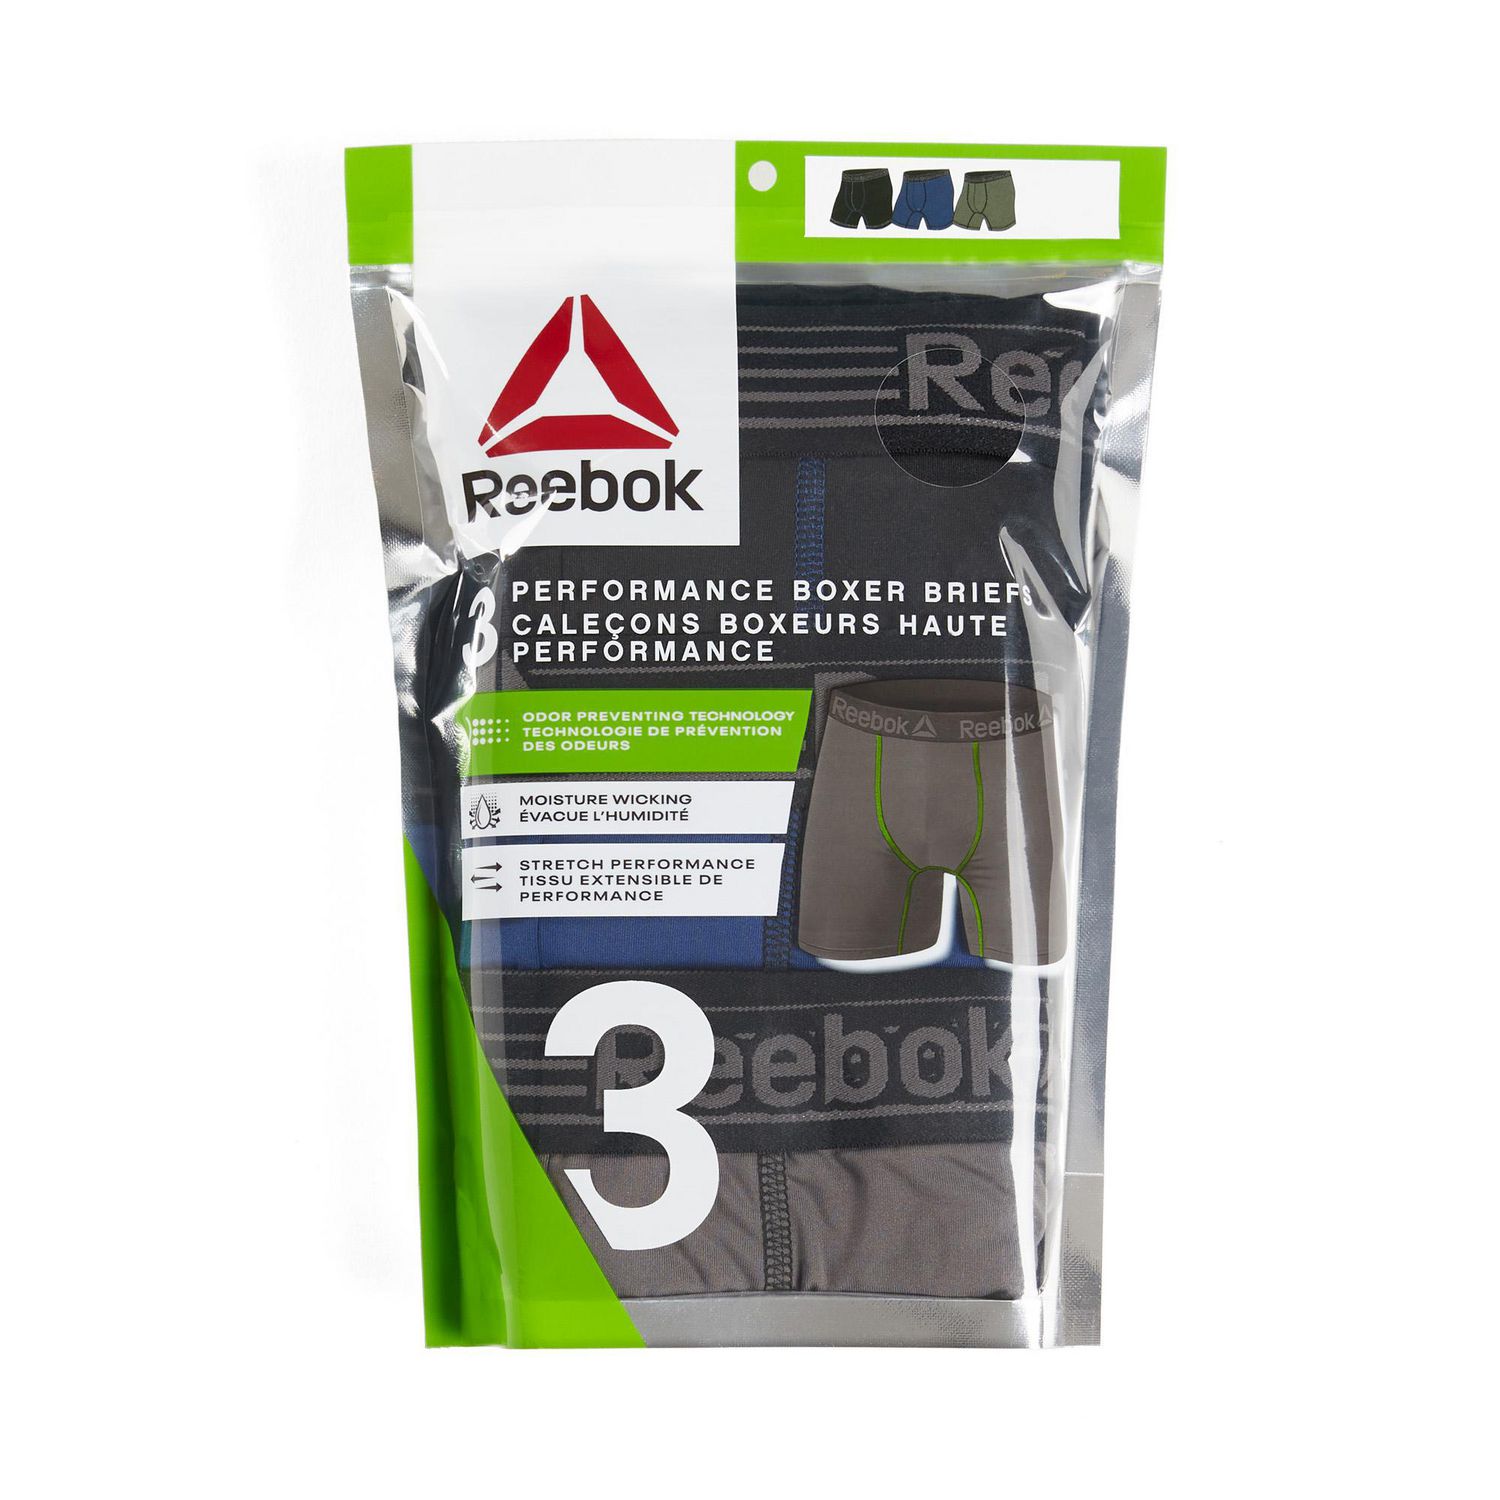 Reebok 3 Performance Boxer Briefs, Size S-XL 